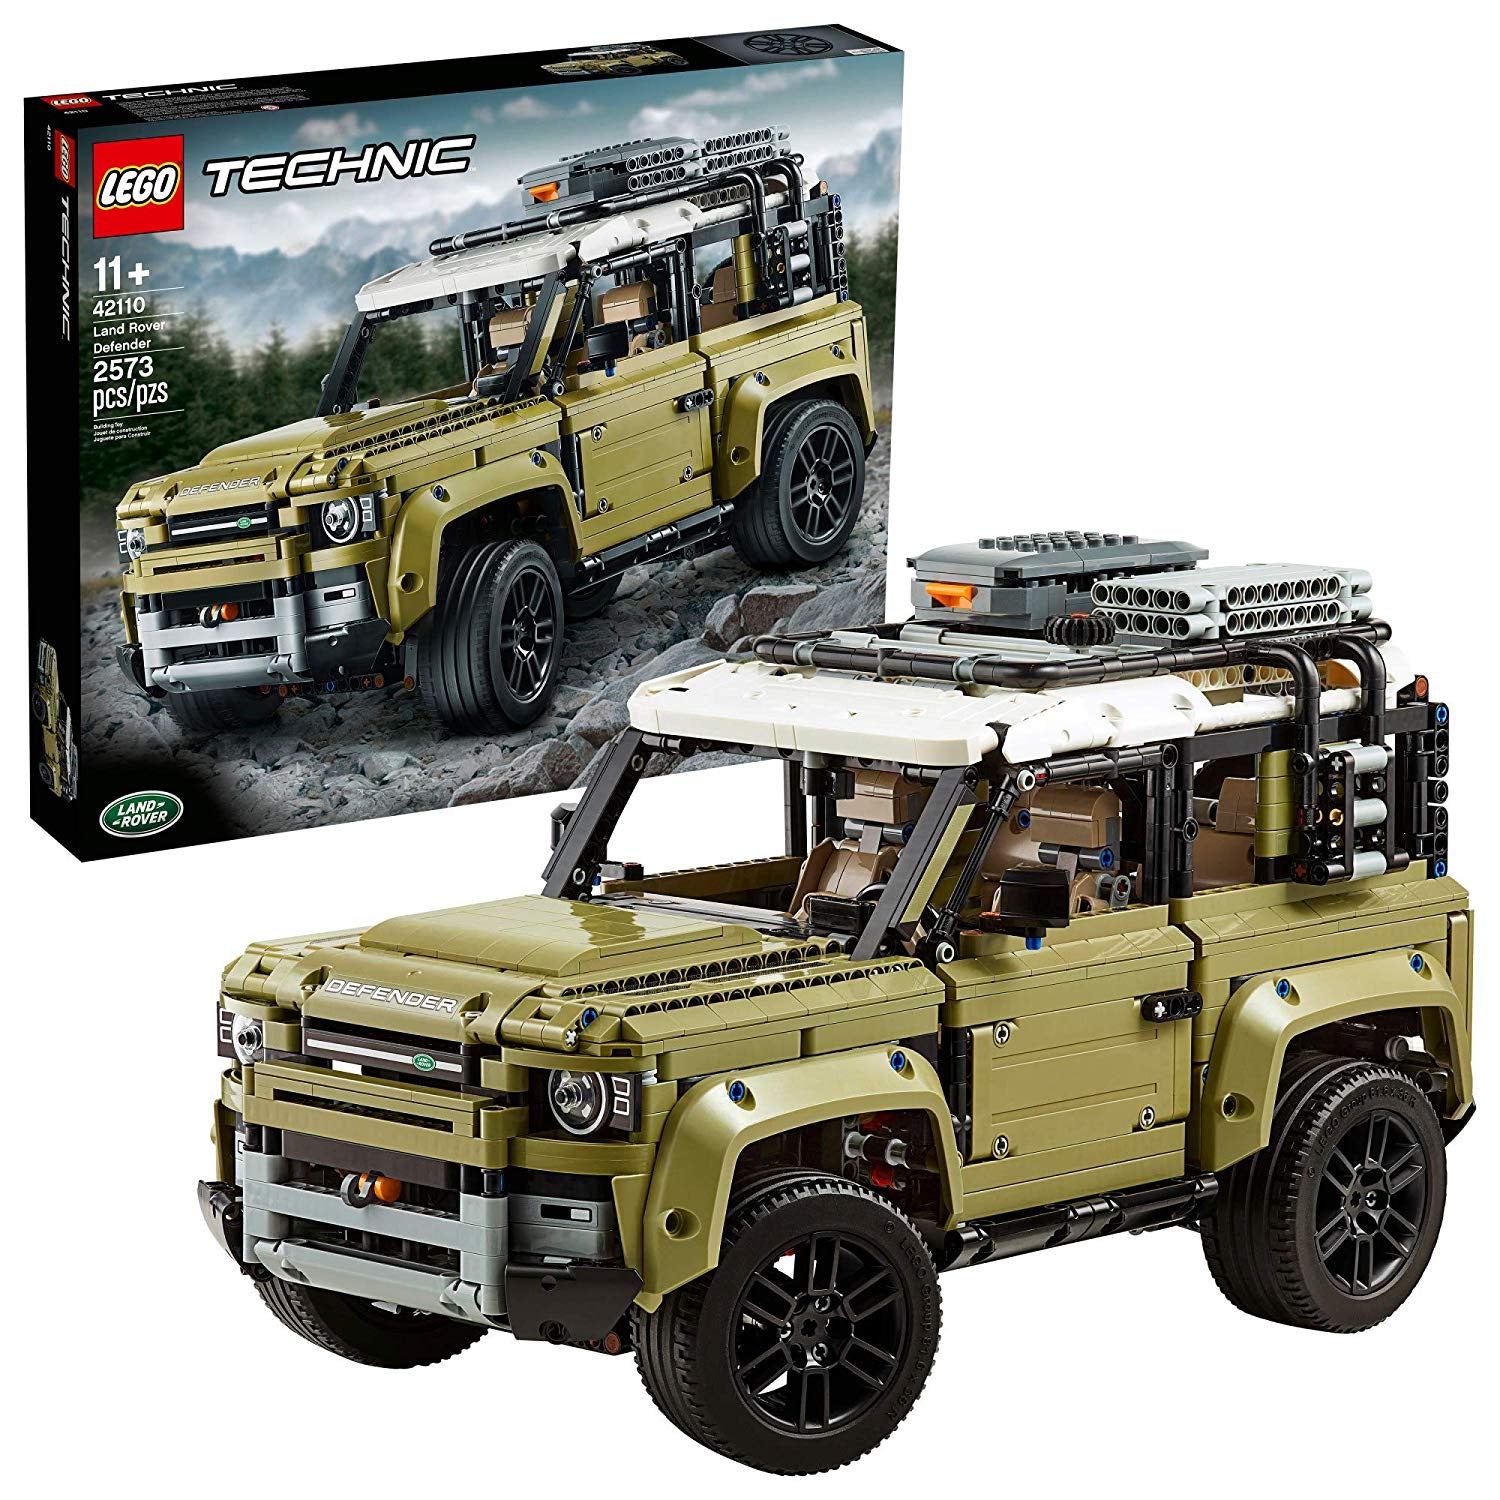 Lego Technic: Land Rover Defender 42110